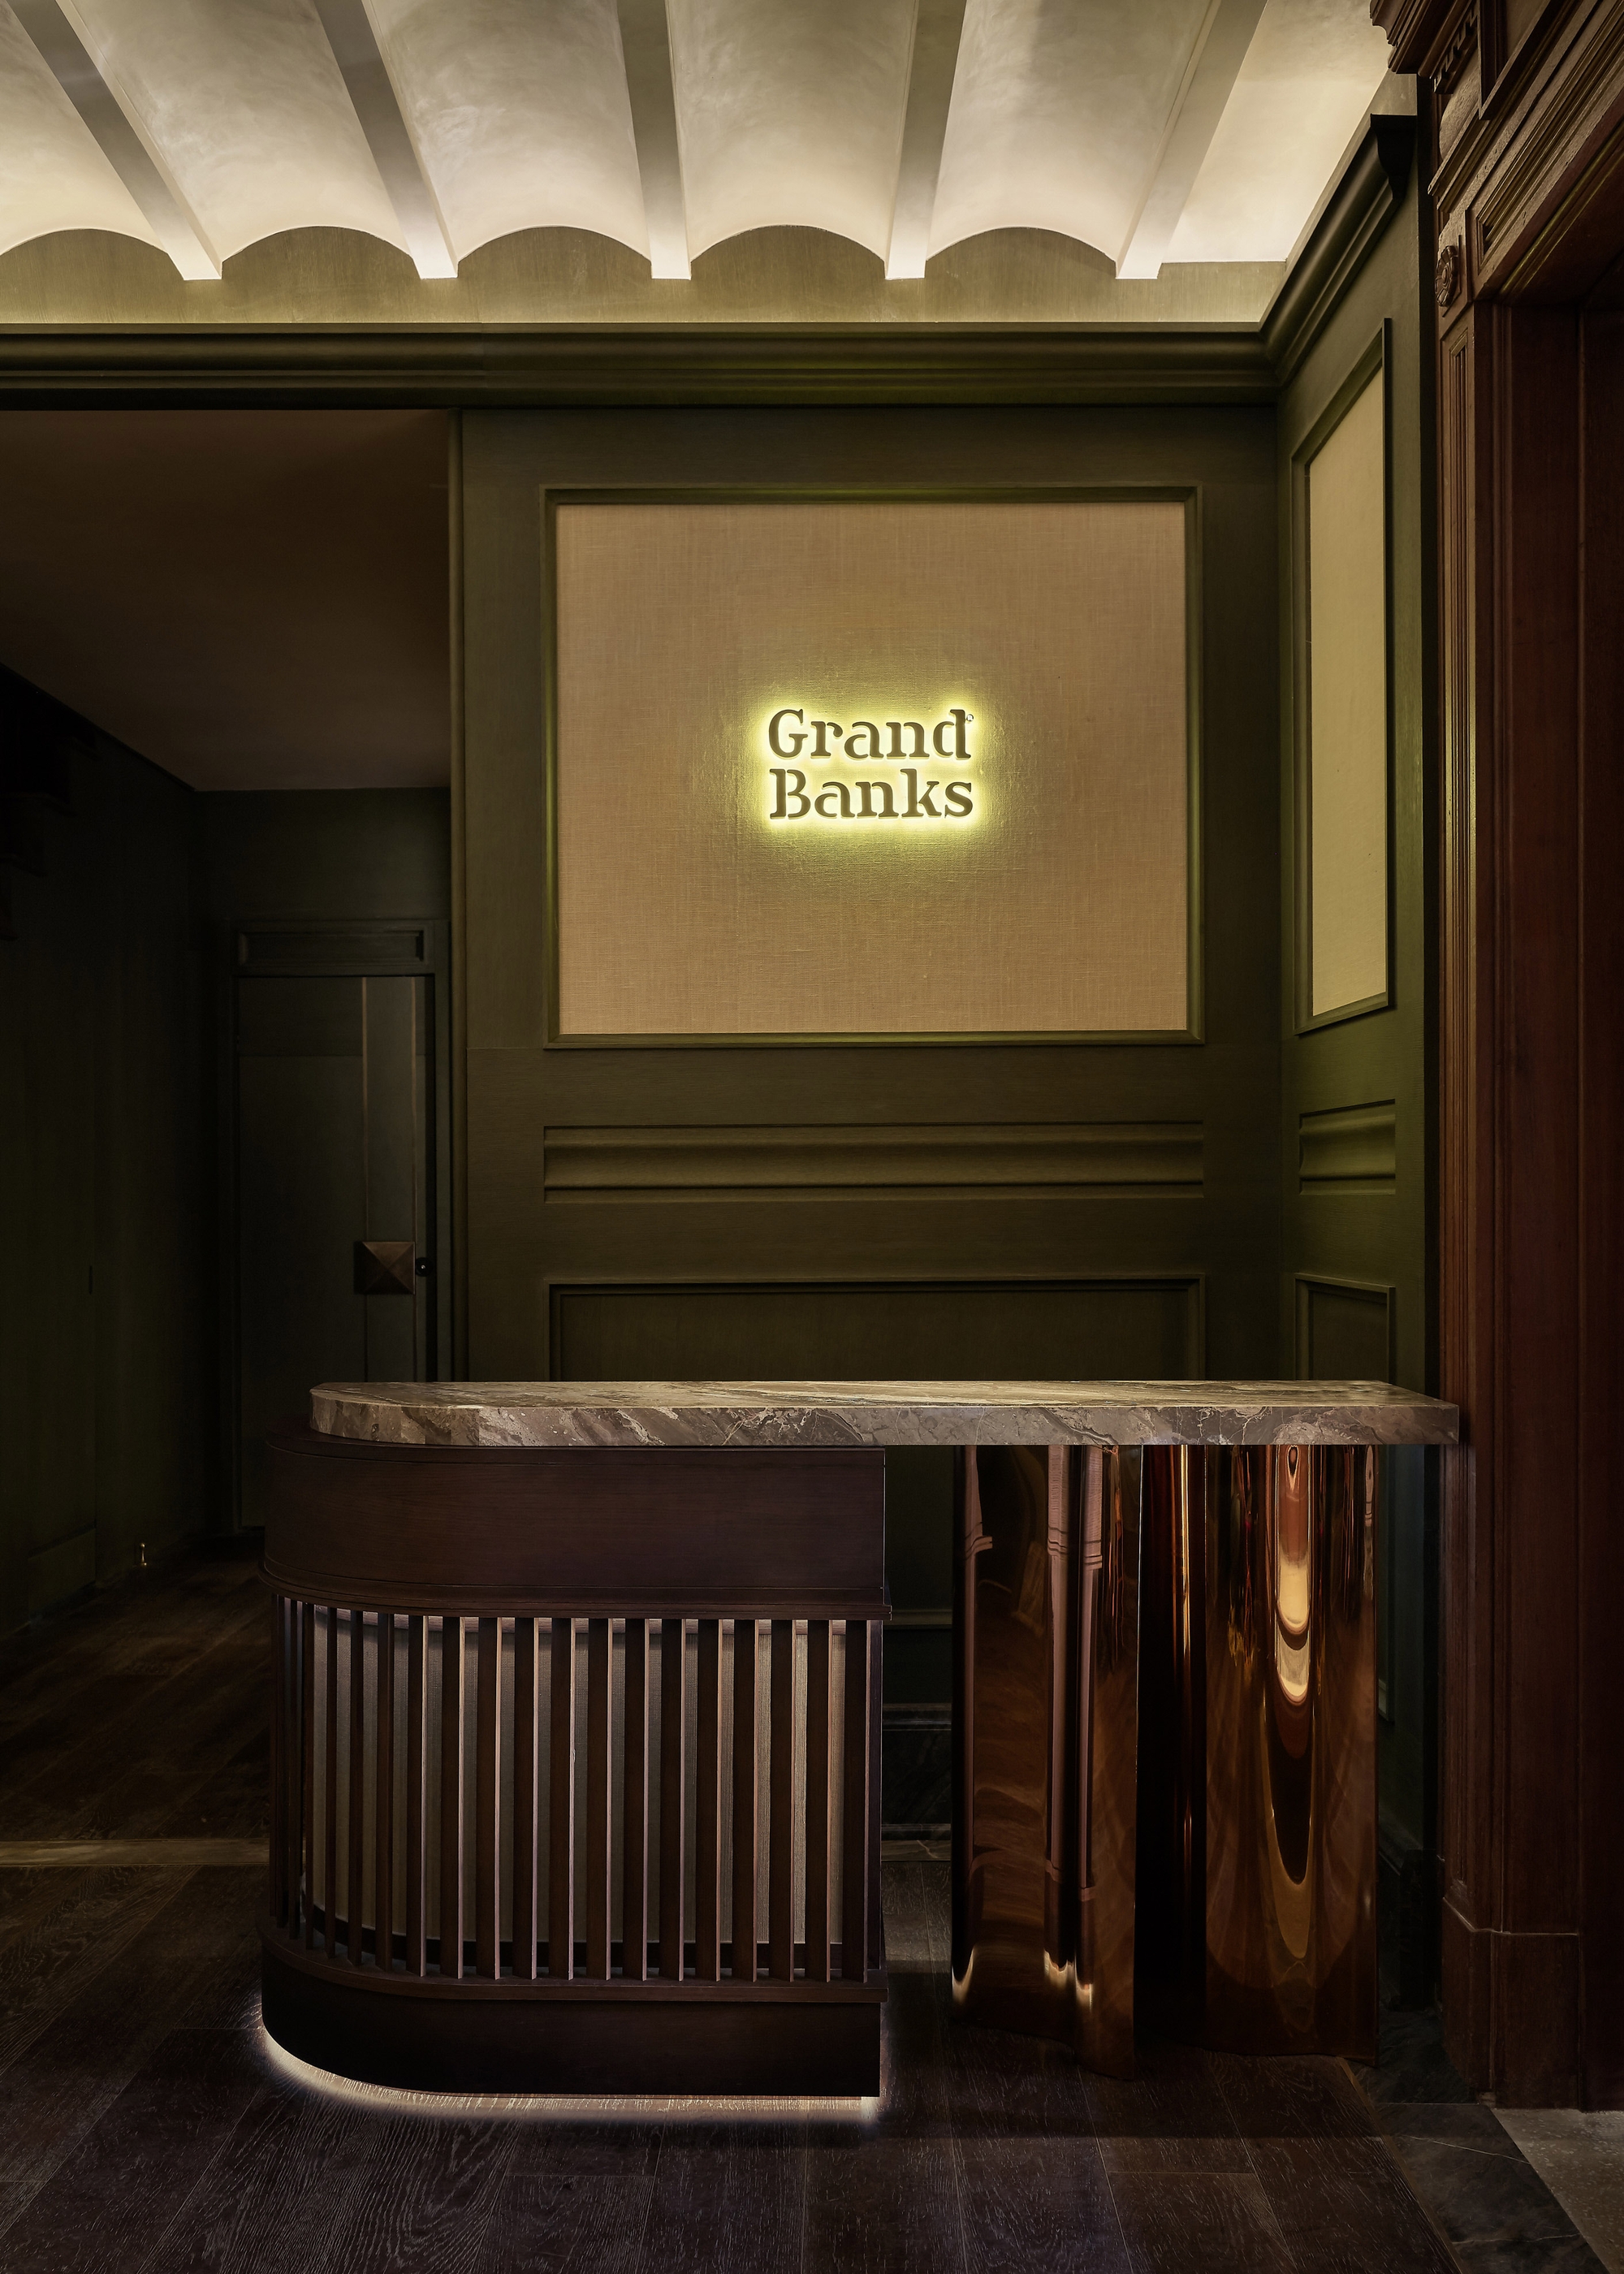 Grand Banks餐厅|ART-Arrakis | 建筑室内设计的创新与灵感